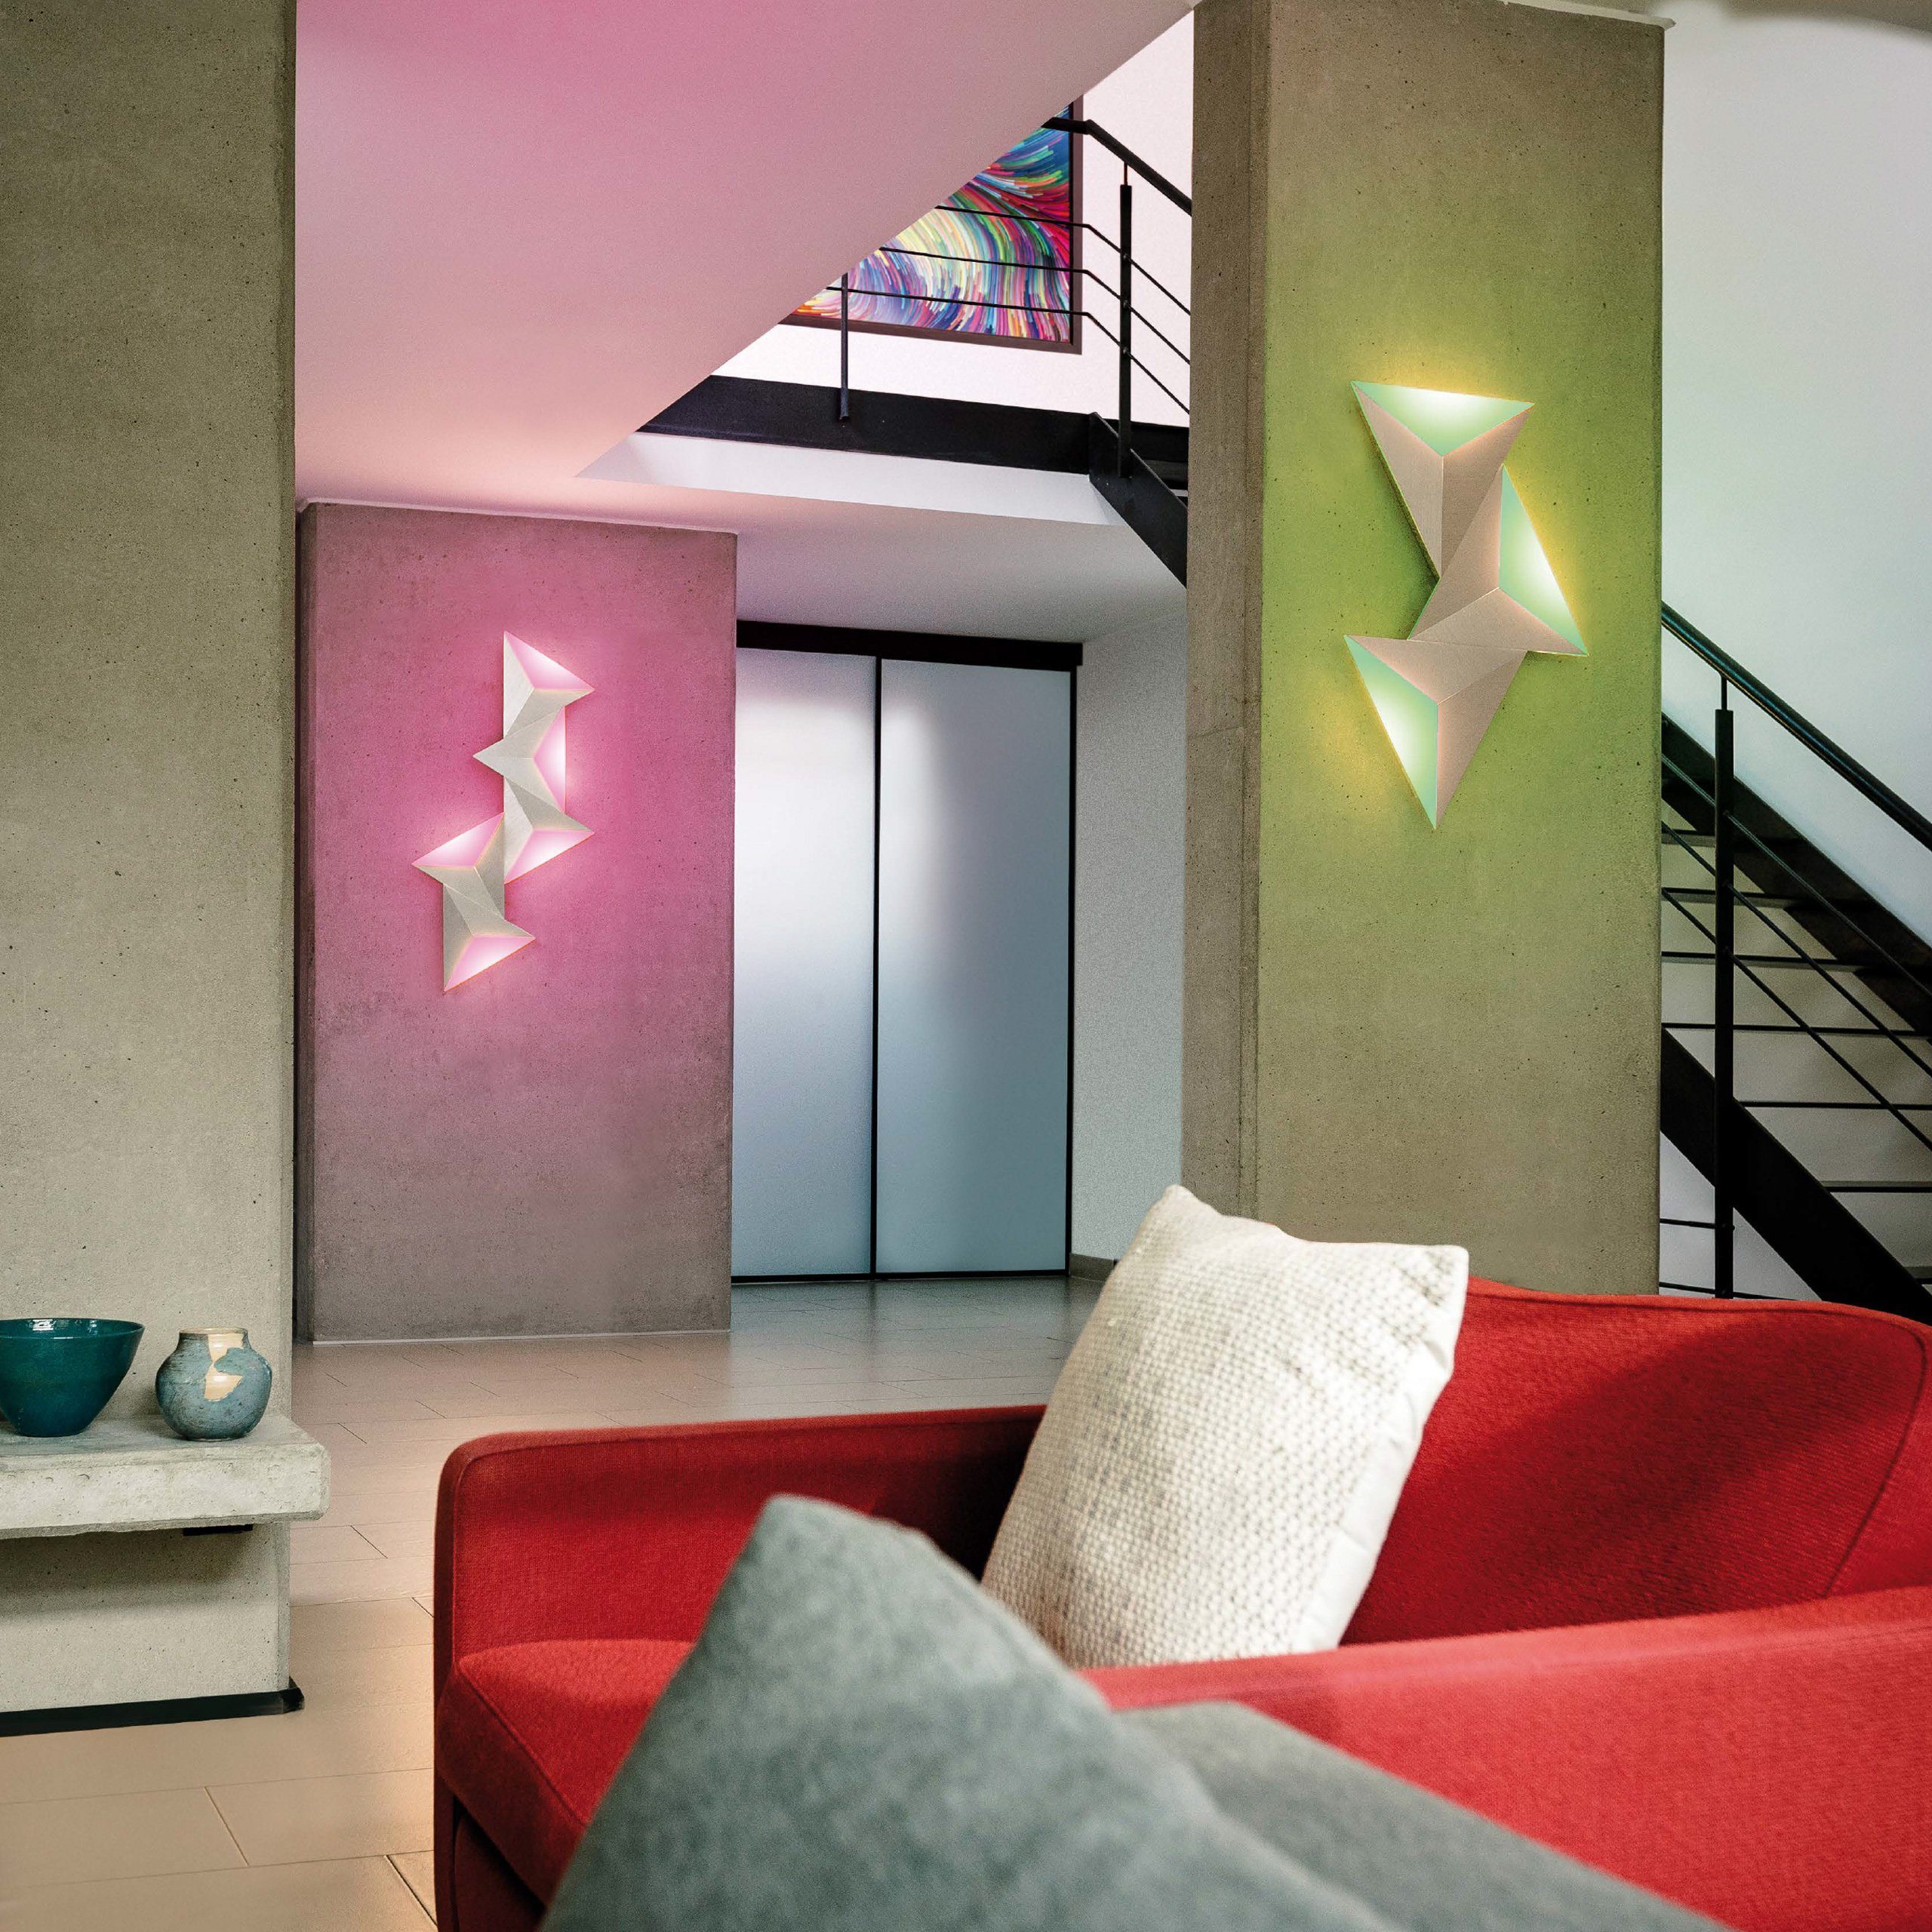 LED mit erweiterbar Home, Wandlampe Smart CCT-Farbtemperaturregelung, Neuhaus Dimmfunktion, Memoryfunktion, RGB, Smarte / Paul Alexa, LED-Leuchte CCT per Fernbedienung Leuchtmittel, RGB-Farbwechsel, DIY dimmbar